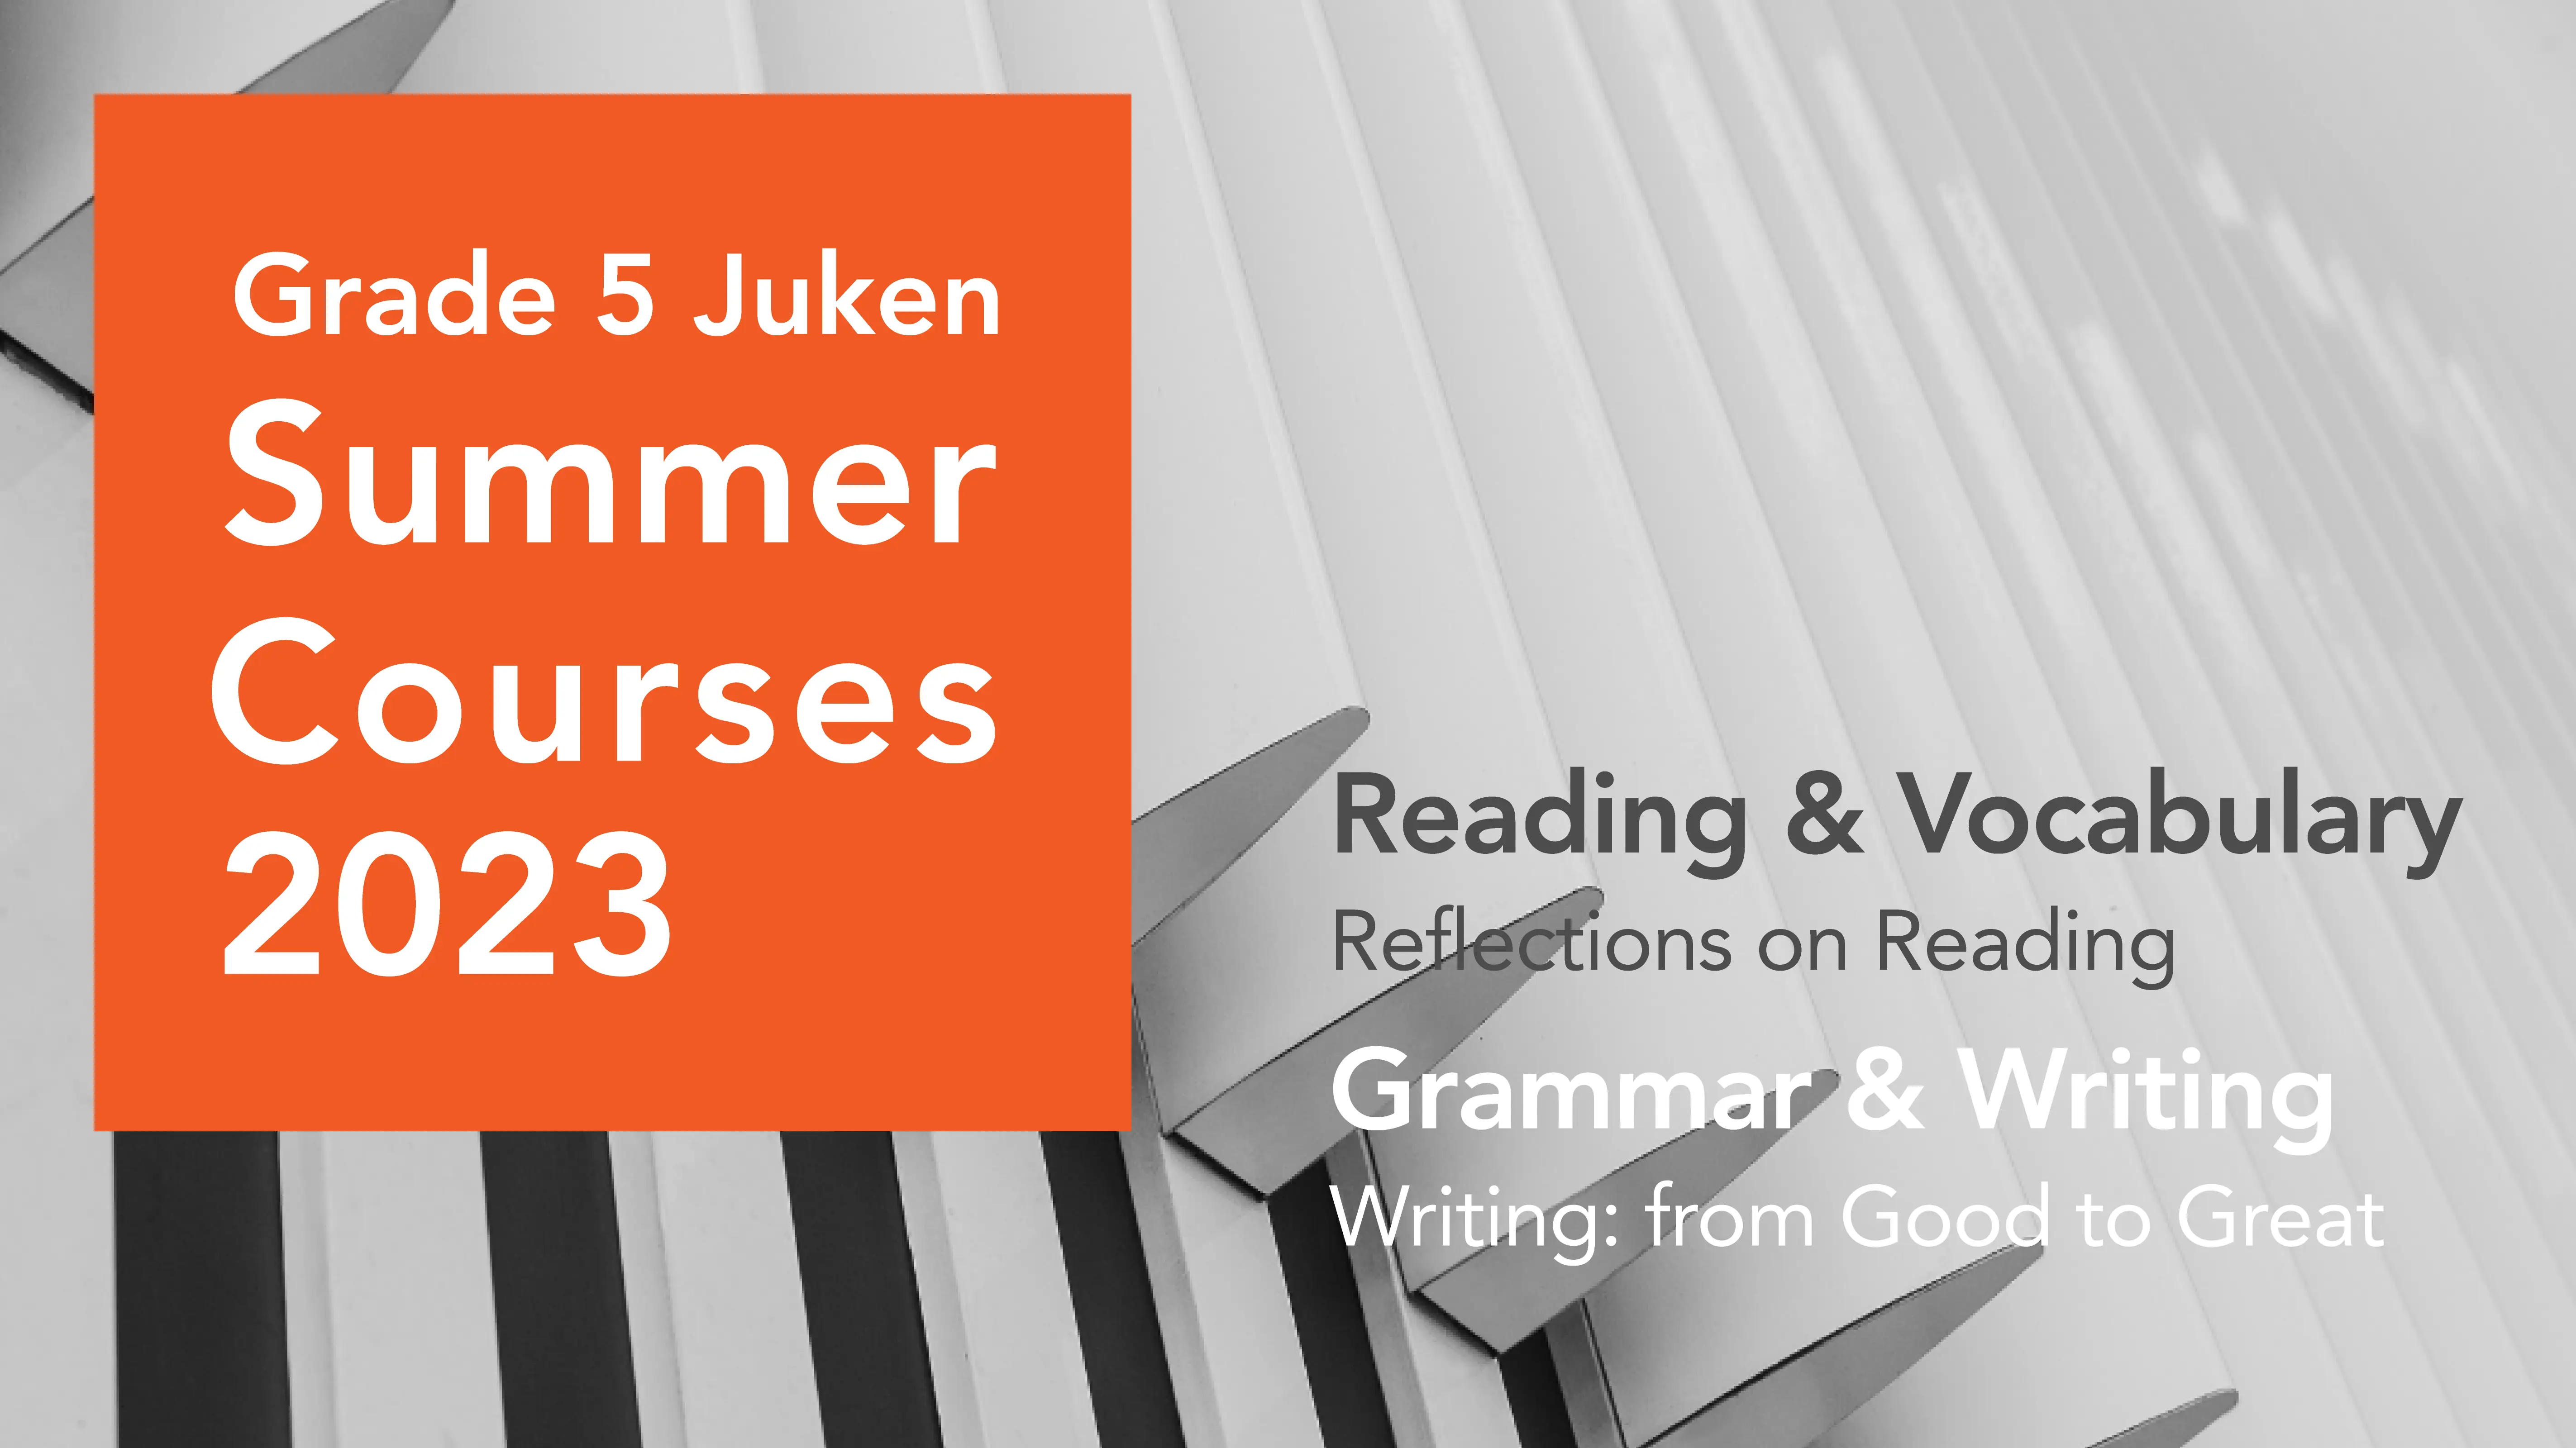 Grade 5 Juken: Summer Courses 2023